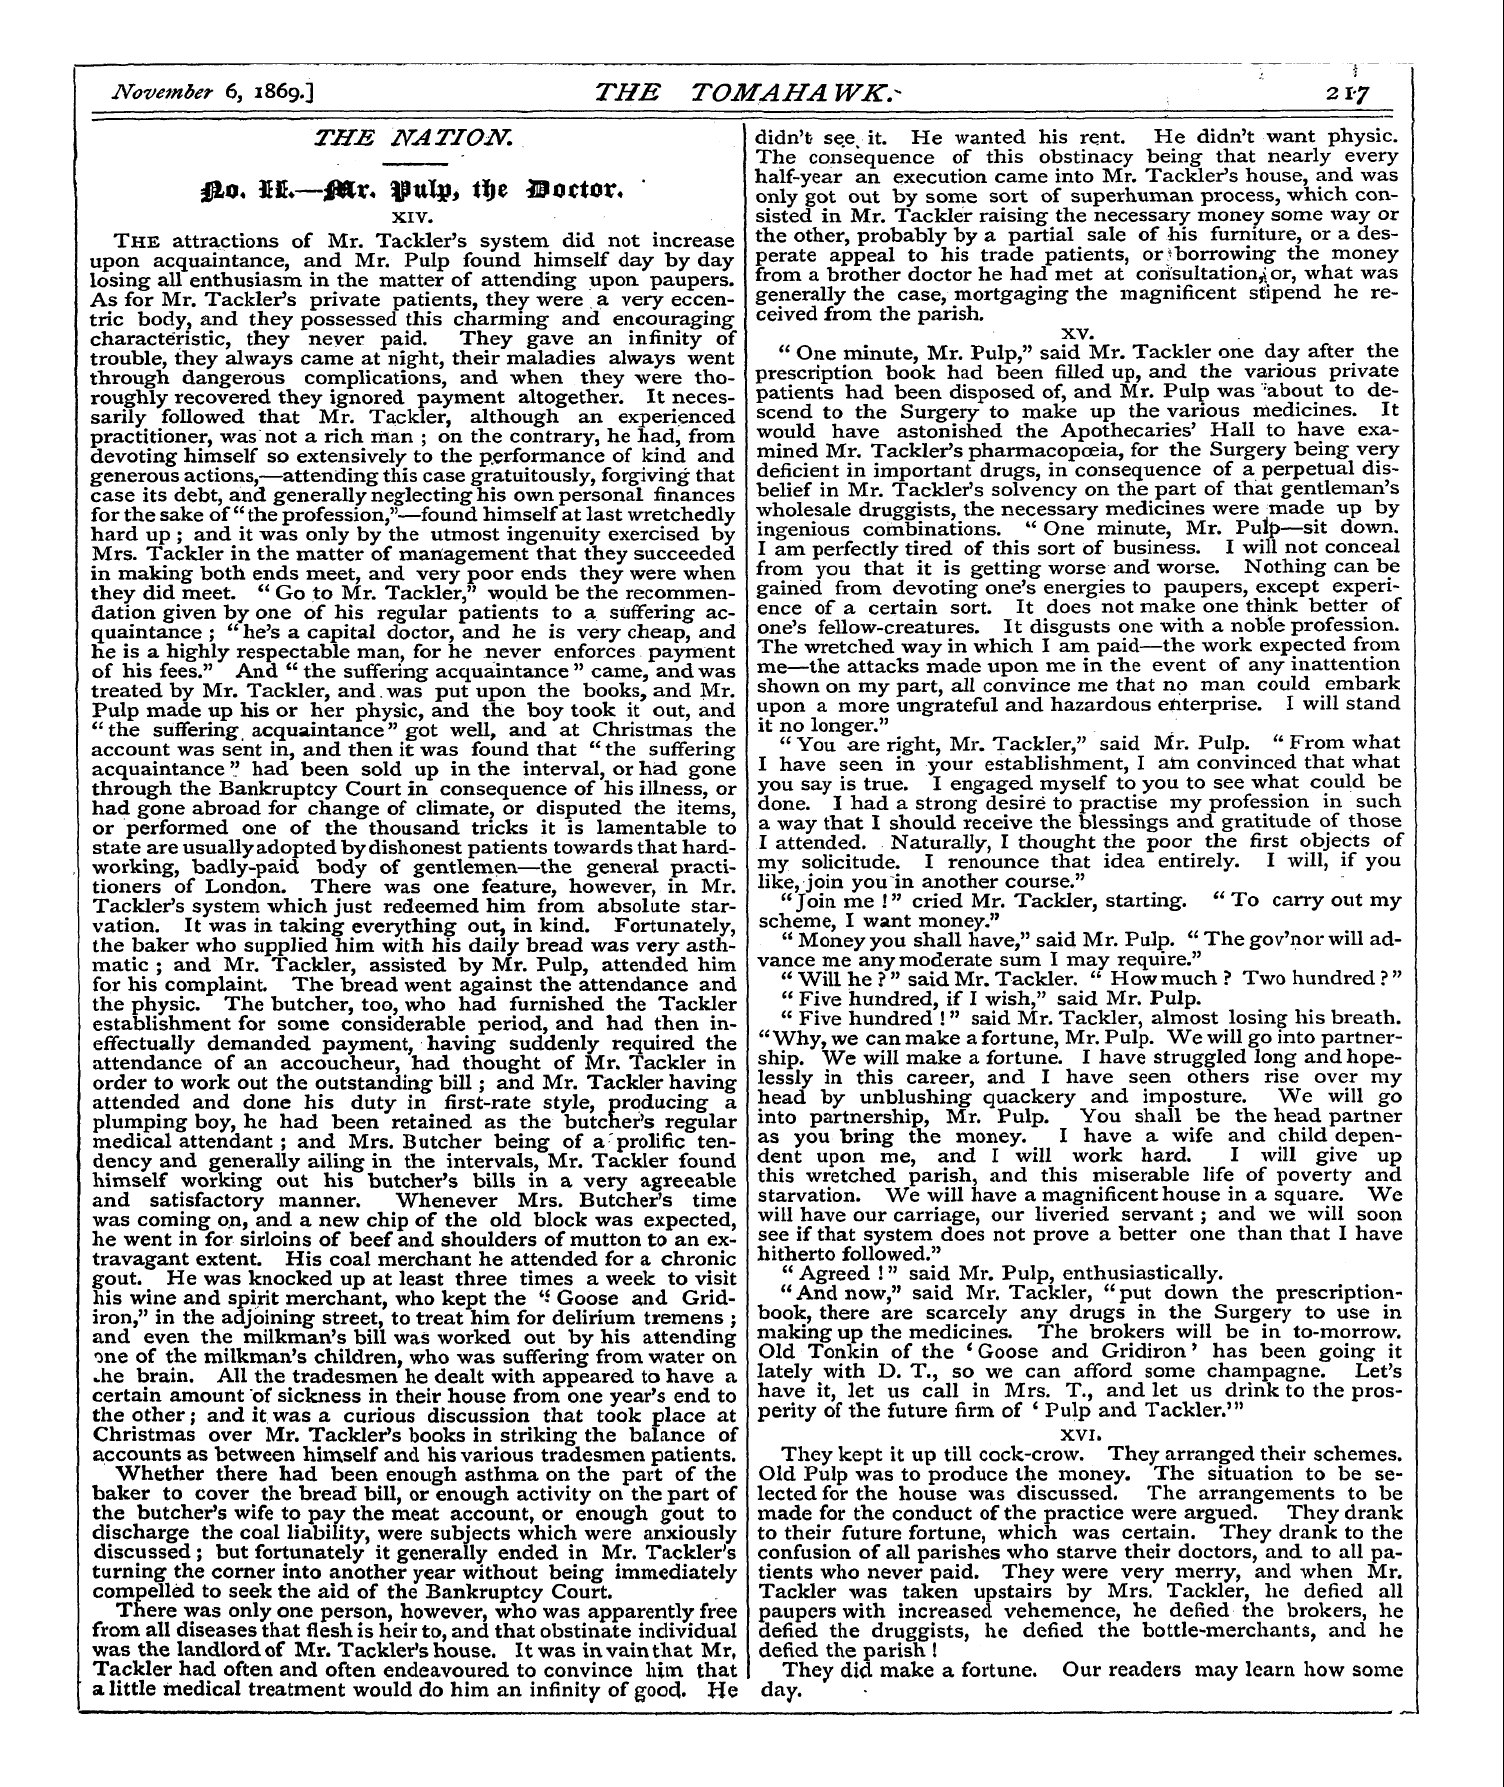 Tomahawk (1867-1870): jS F Y, 1st edition - Tifjs Nation.